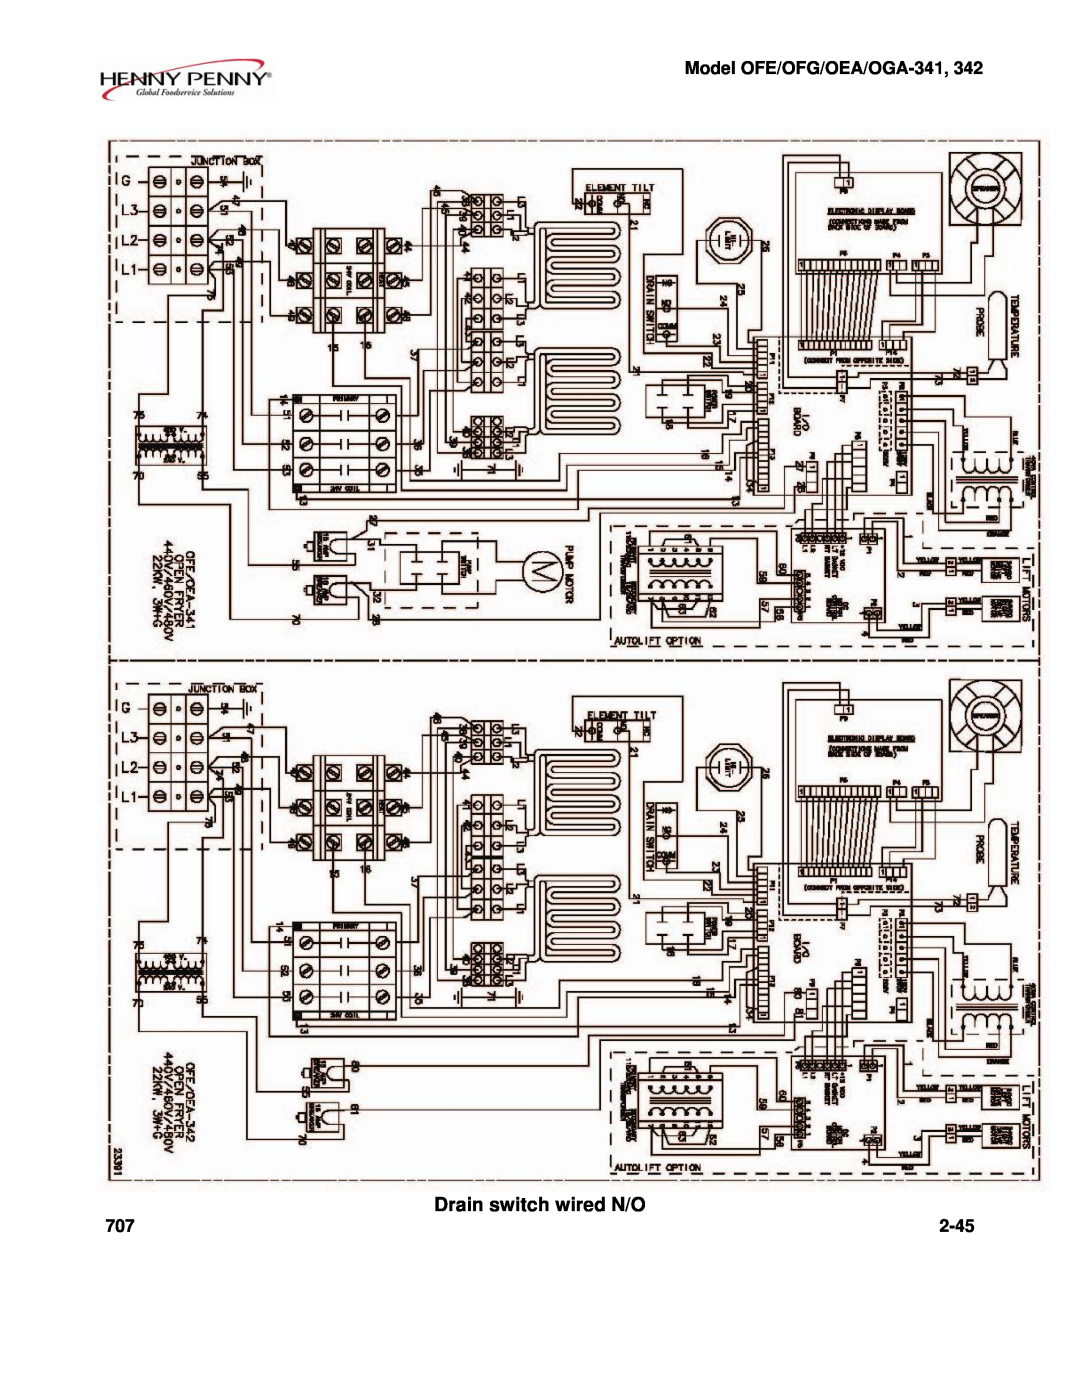 Henny Penny OFE/OFG-342, OFE/OFG-341, OEA/OGA-342 Drain switch wired N/O, Model OFE/OFG/OEA/OGA-341,342, 2-45 